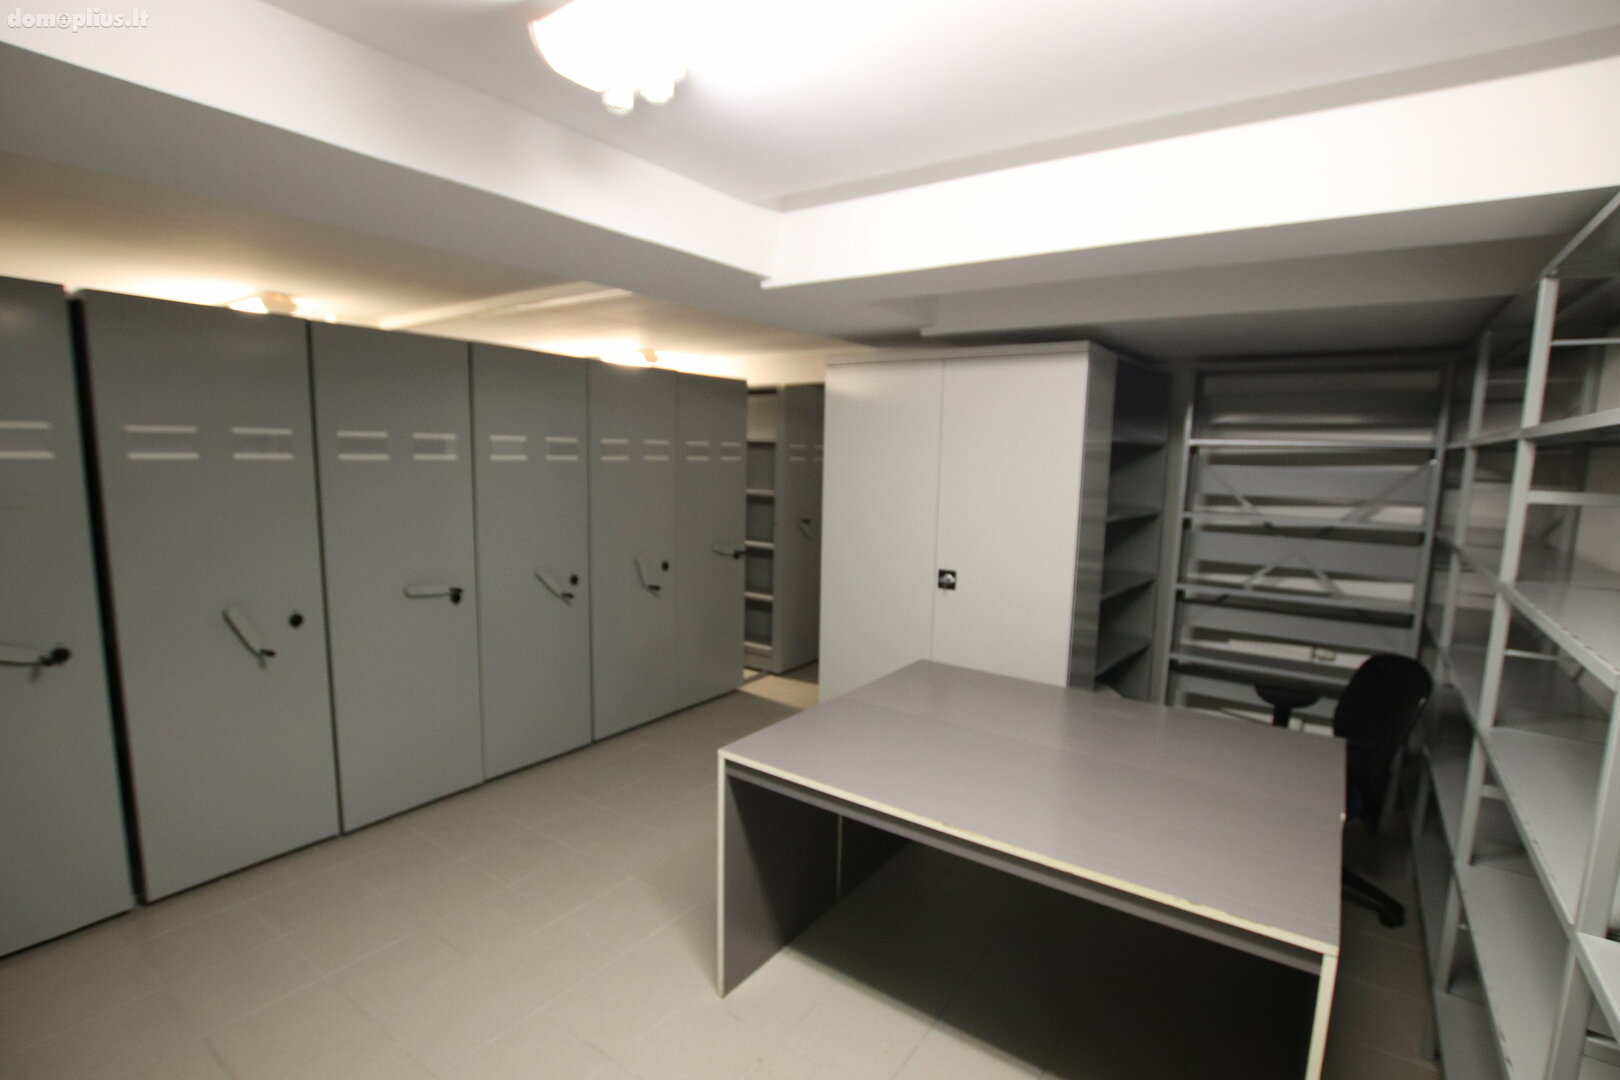 Office / Storage / Other Premises for rent Vilniuje, Naujamiestyje, Vytenio g.